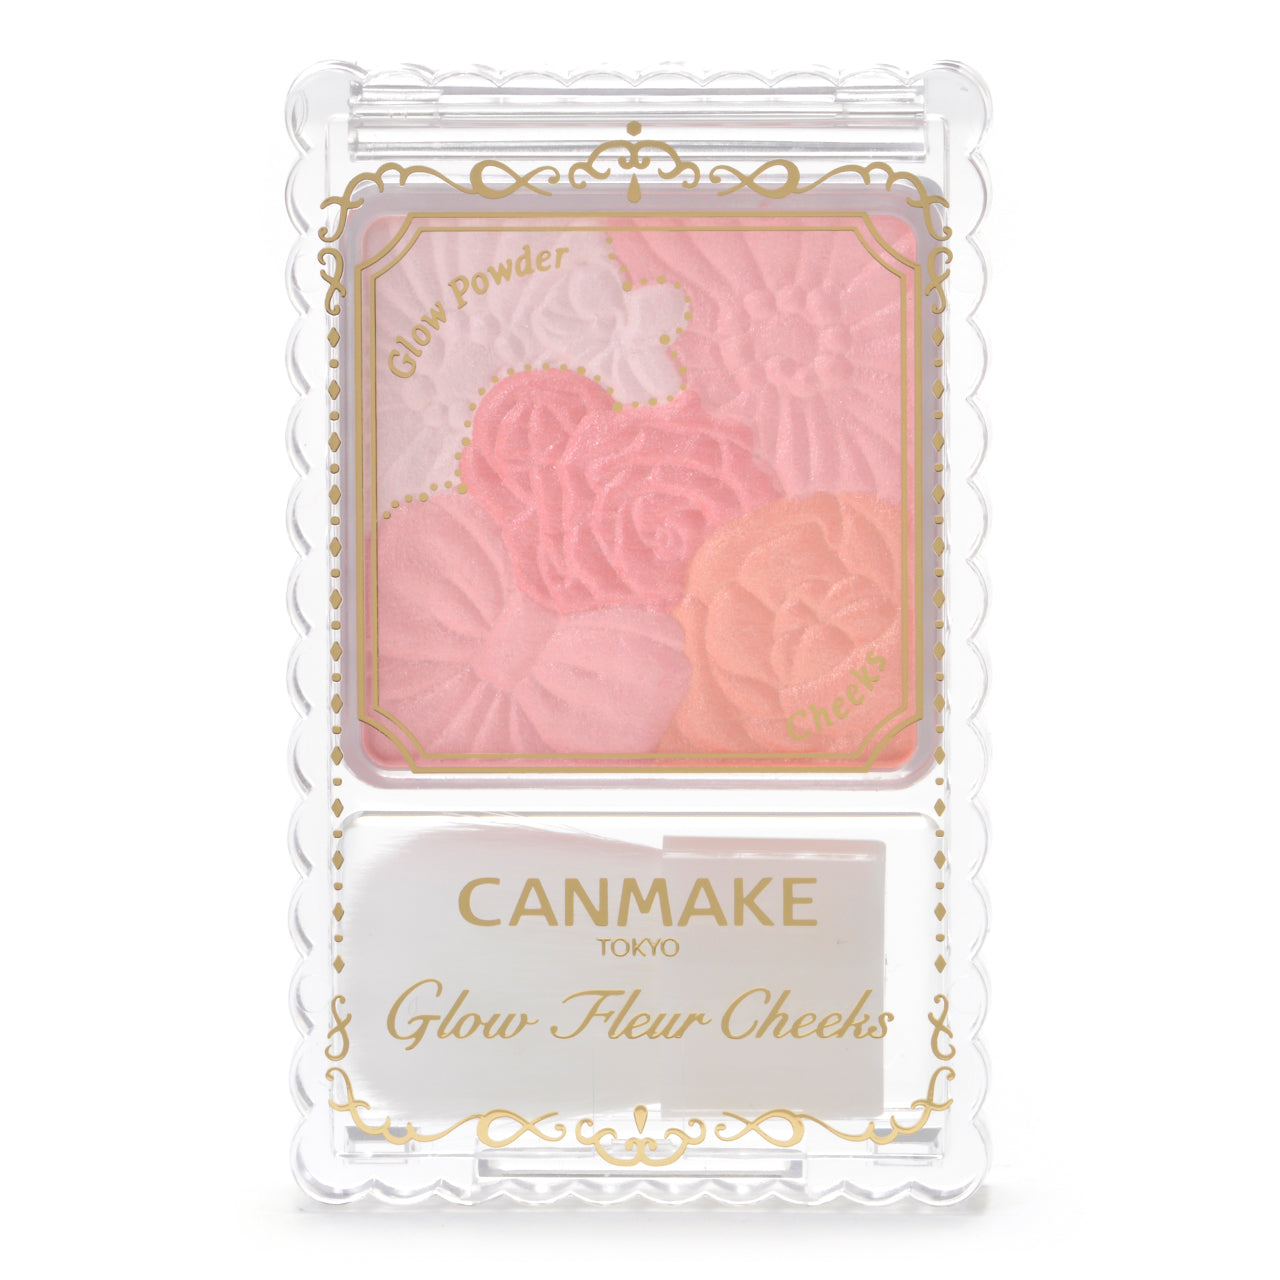 Glow Fleur Cheeks - TokTok Beauty